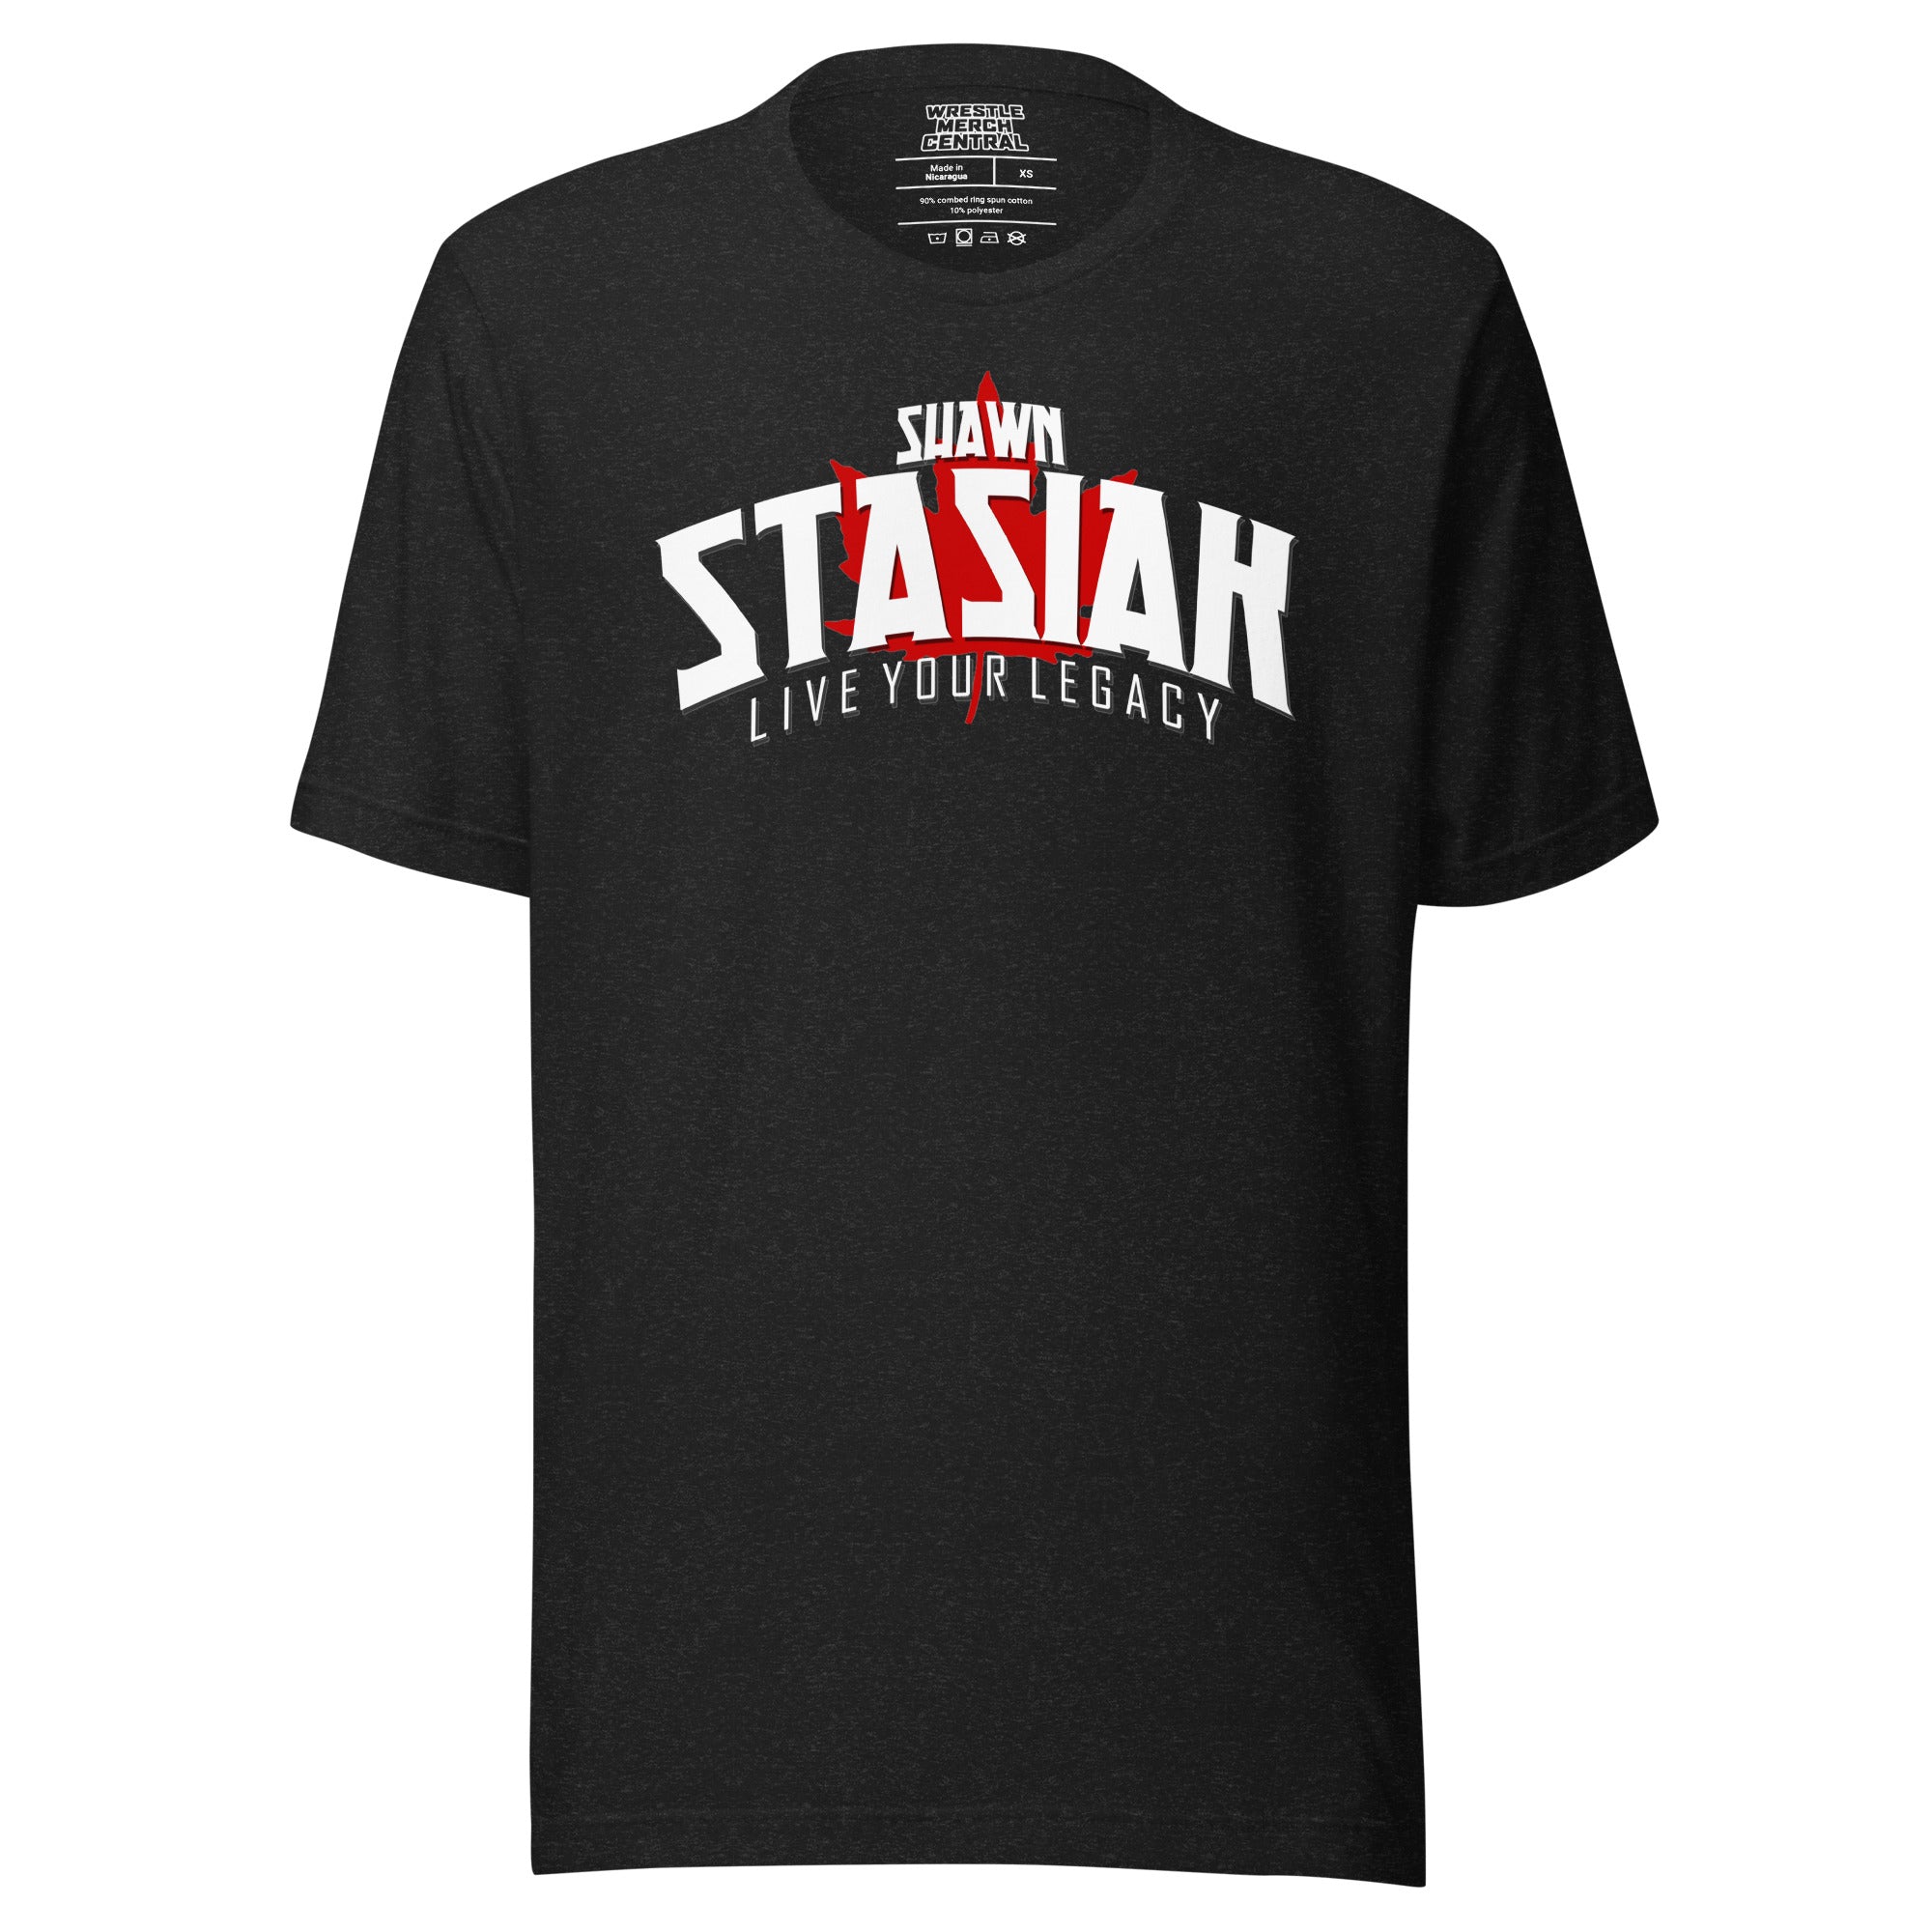 Shawn Stasiak "Live Your Legacy" Canadian Unisex T-Shirt